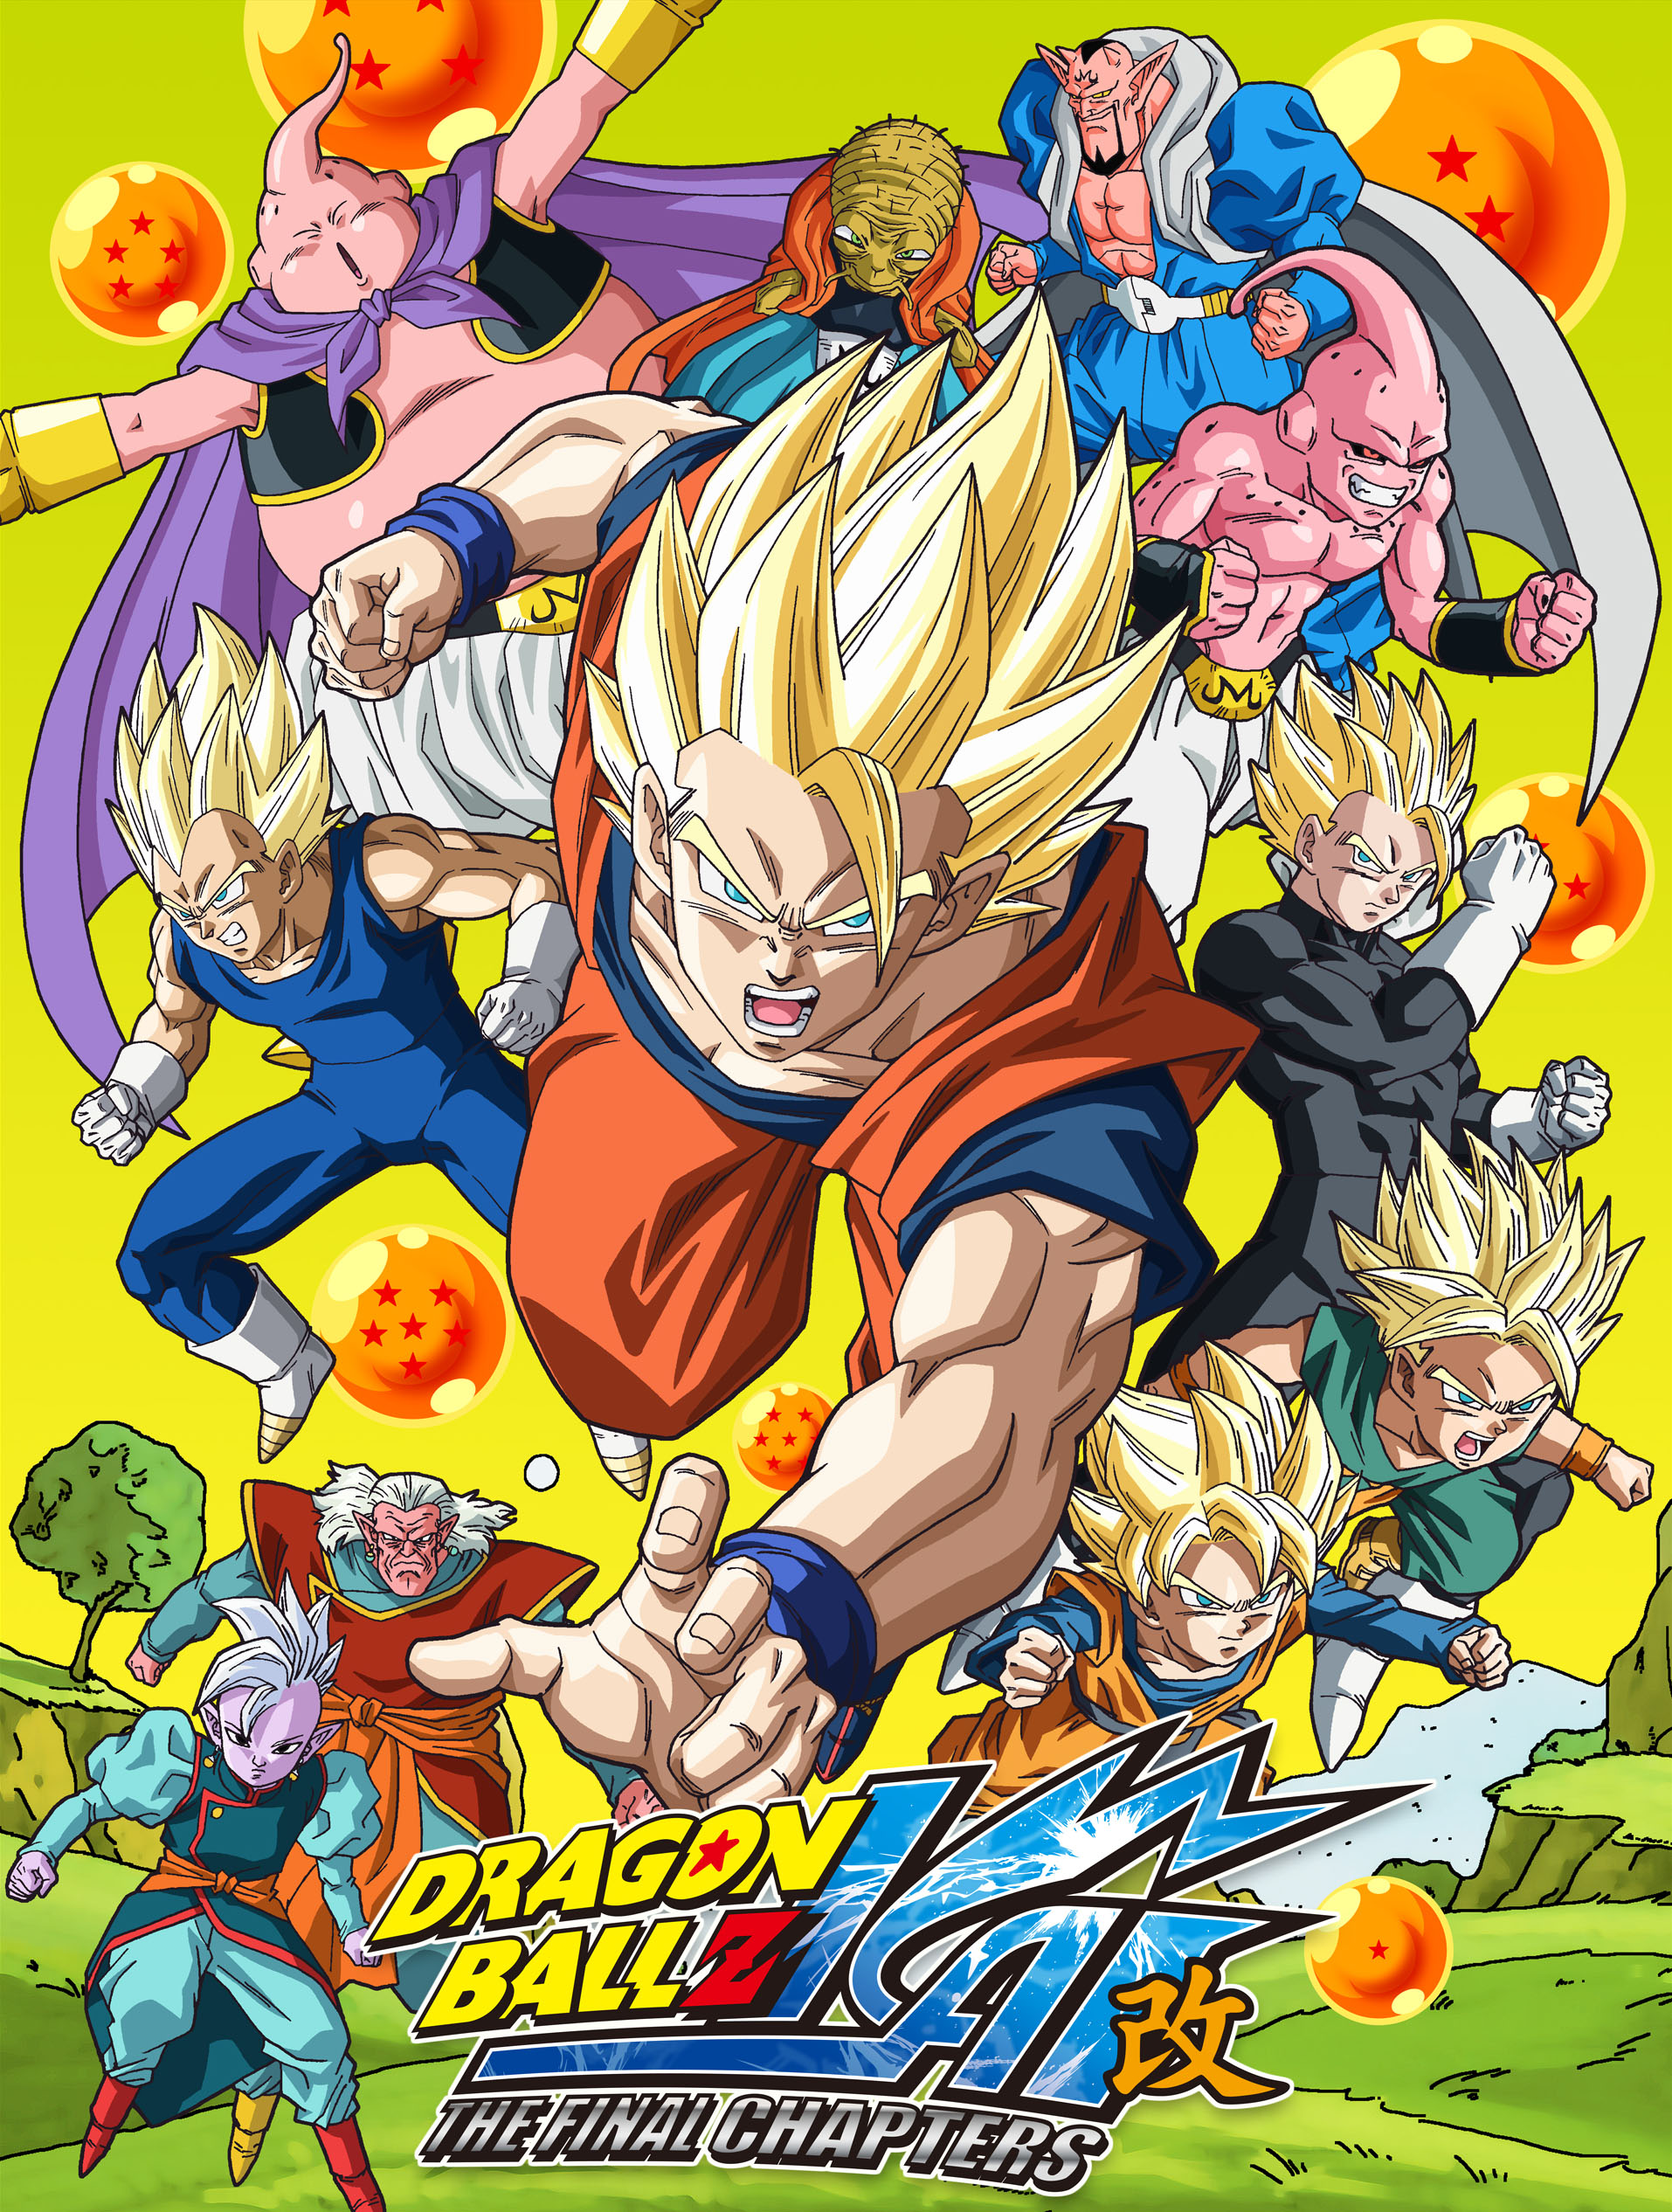 Dragon Ball Z Kai (TV 2) - Anime News Network